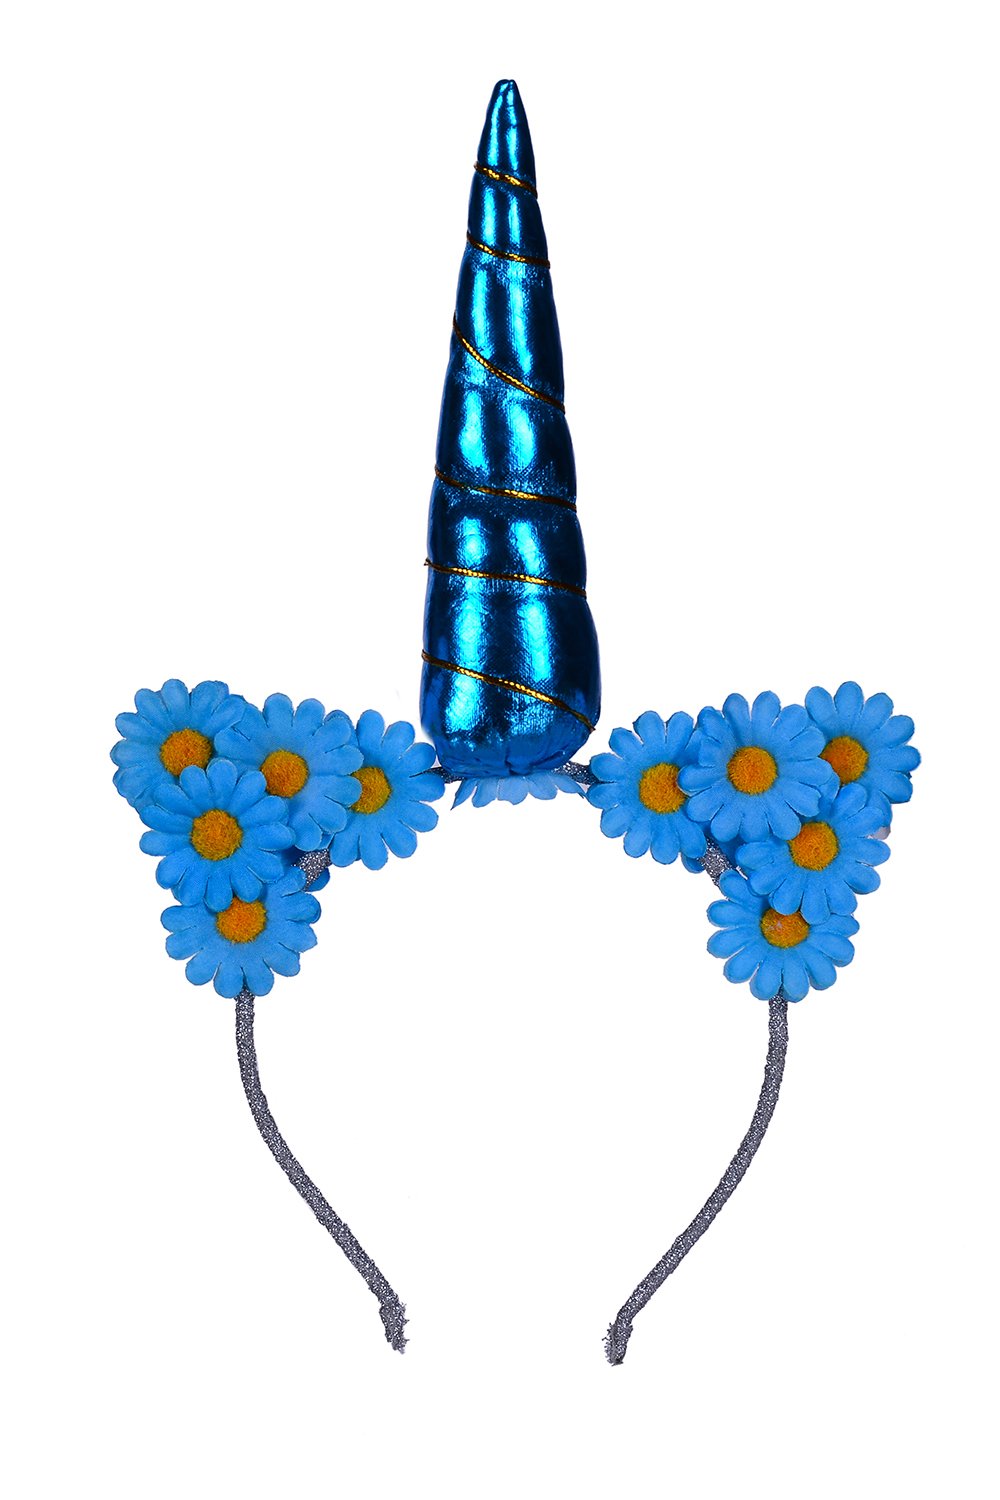 Original LED Ears - Blue Unicorn